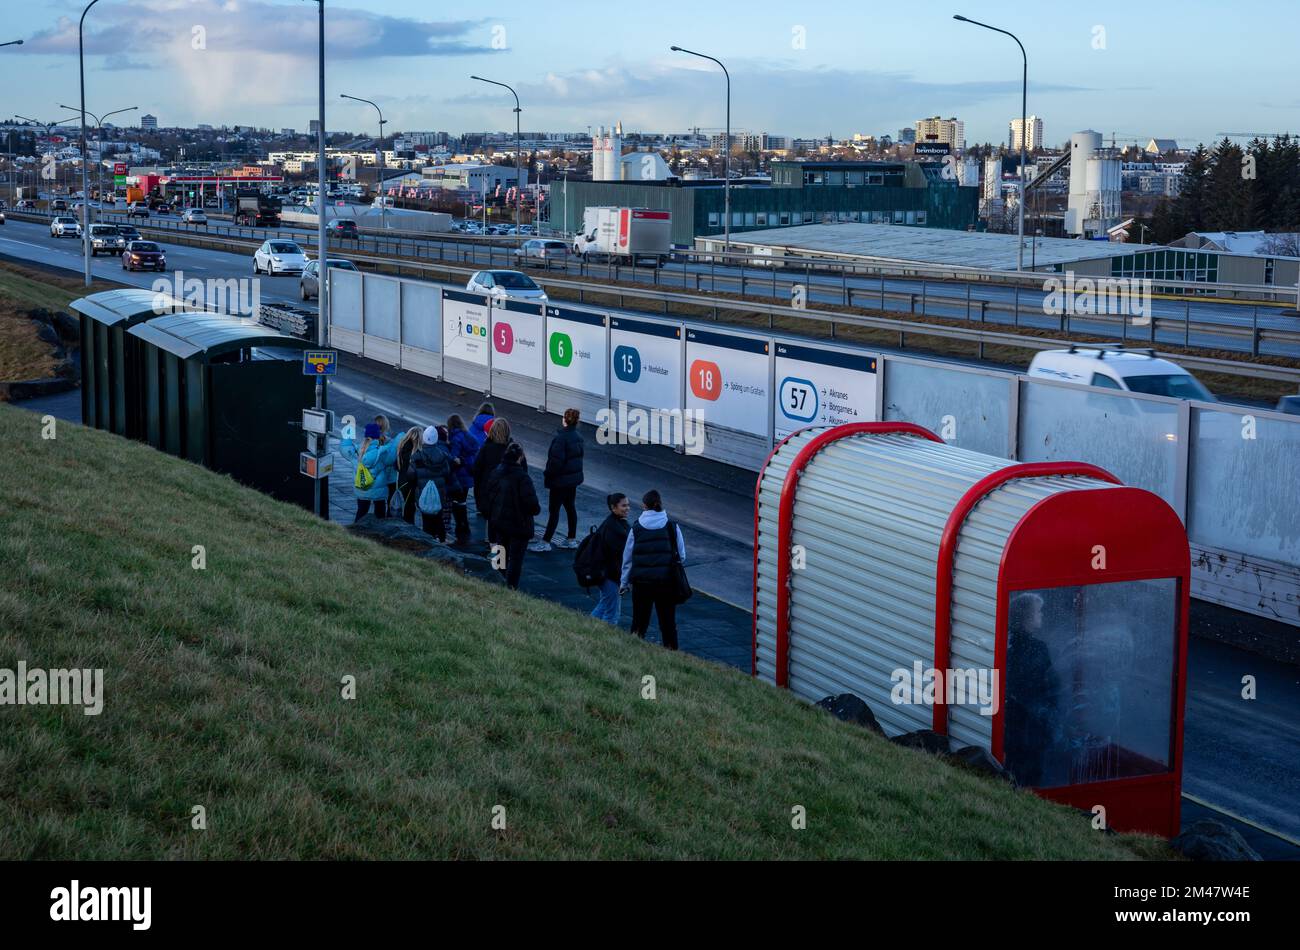 Reykjavik, Iceland - November 25, 2022: People waiting for the bus on Artun station. Stock Photo